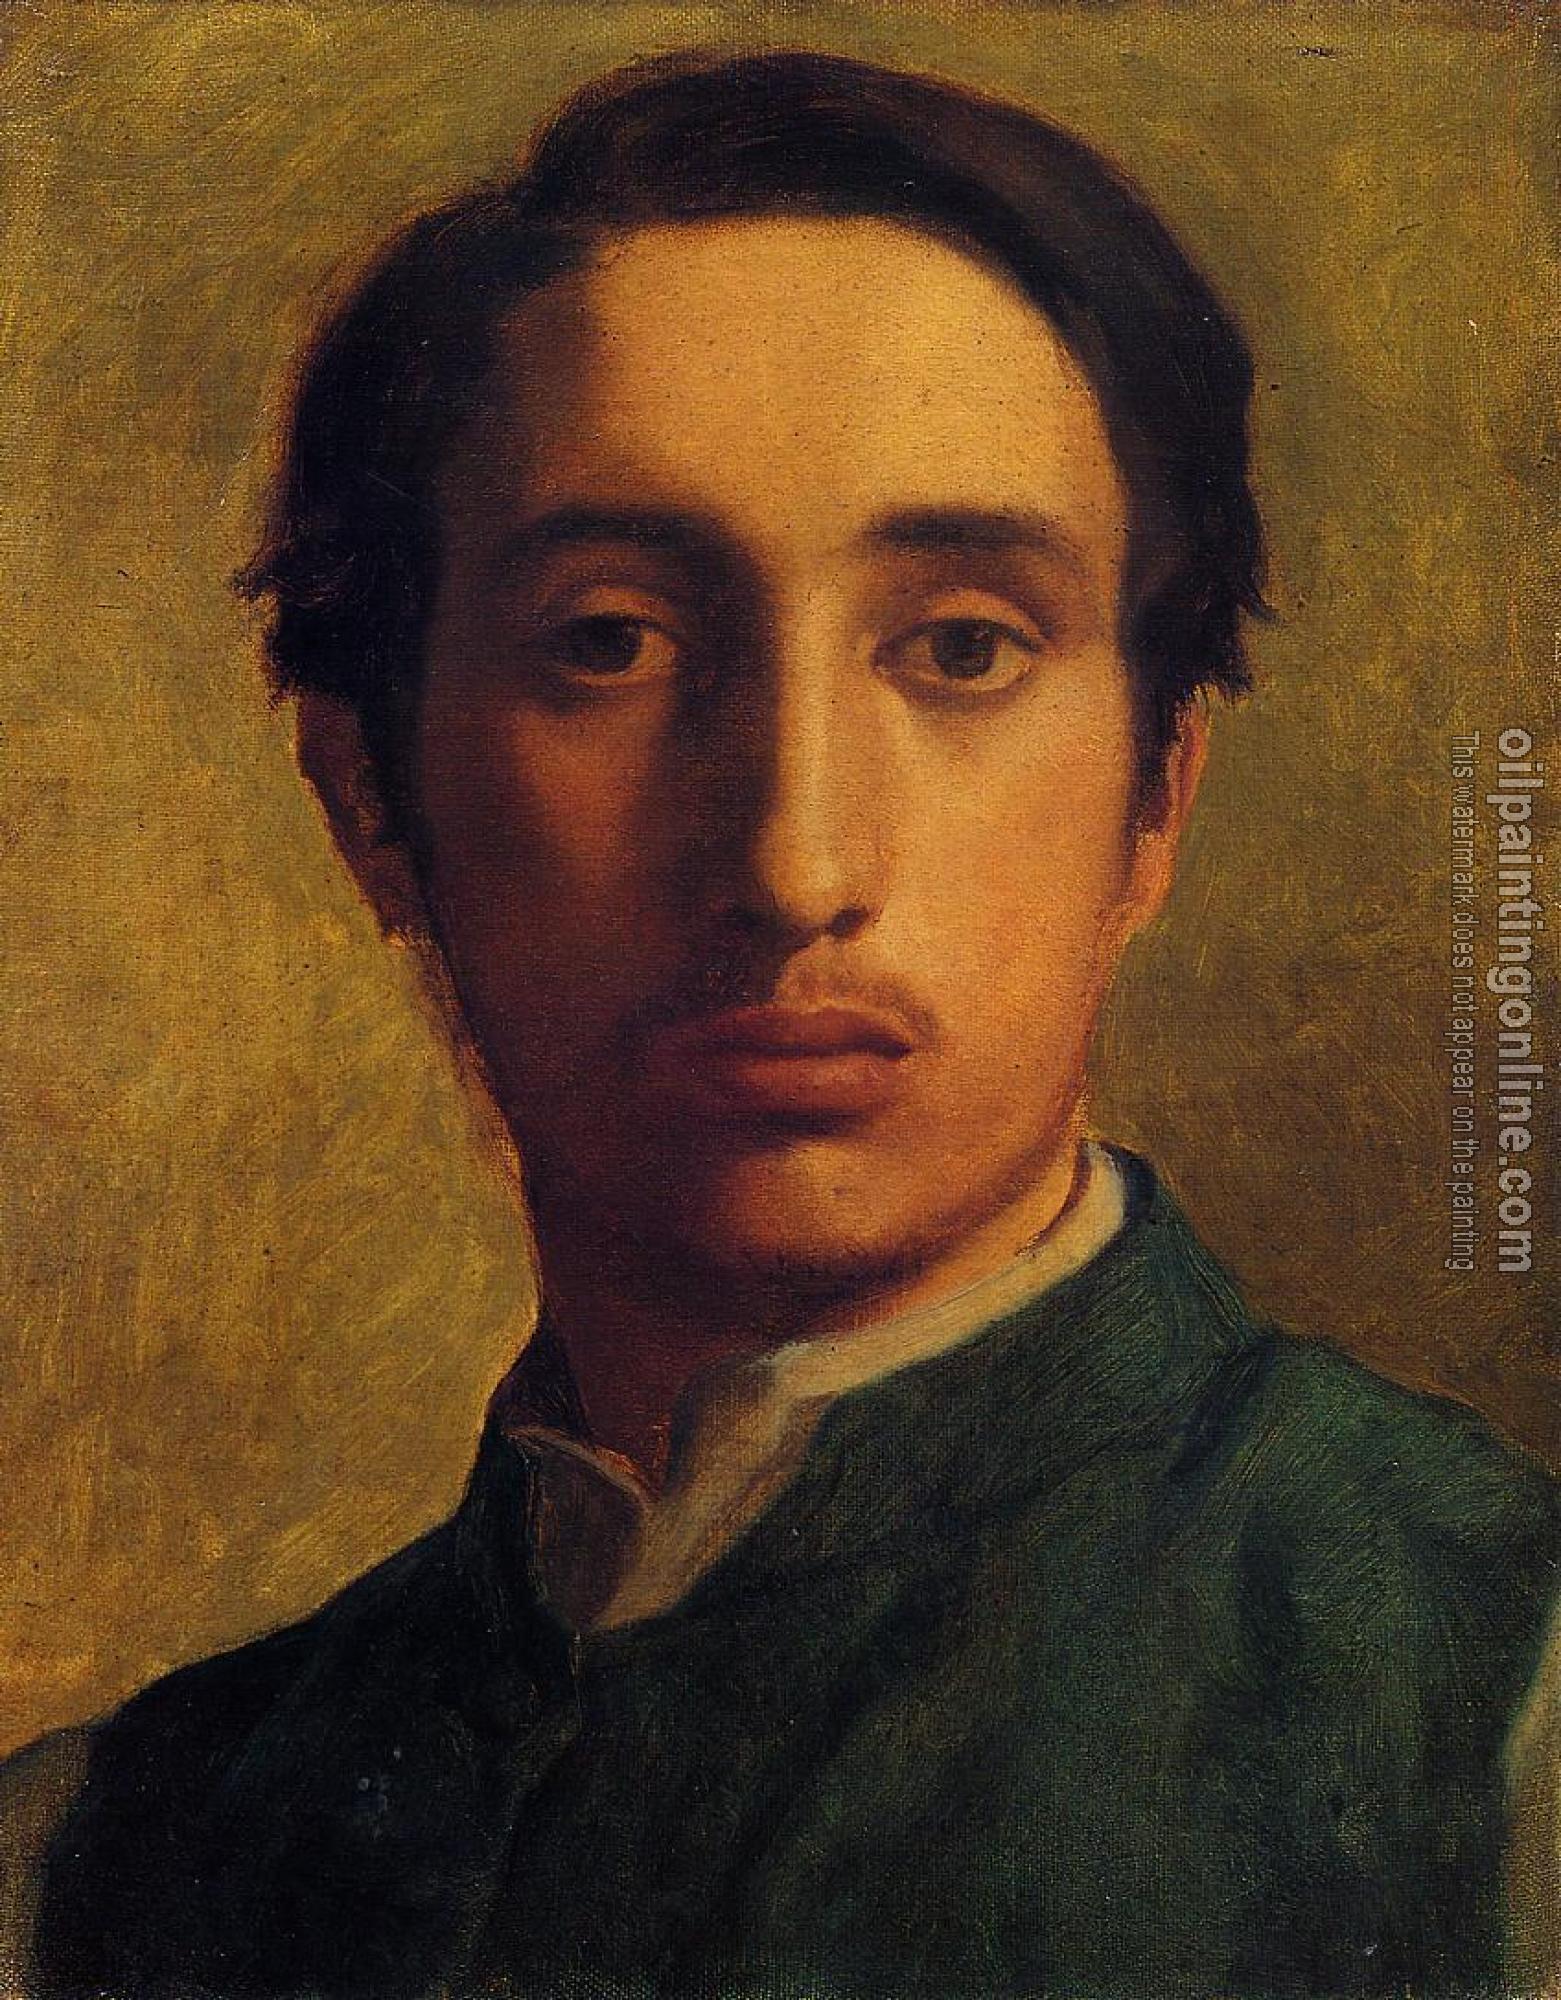 Degas, Edgar - Degas in a Green Jacket